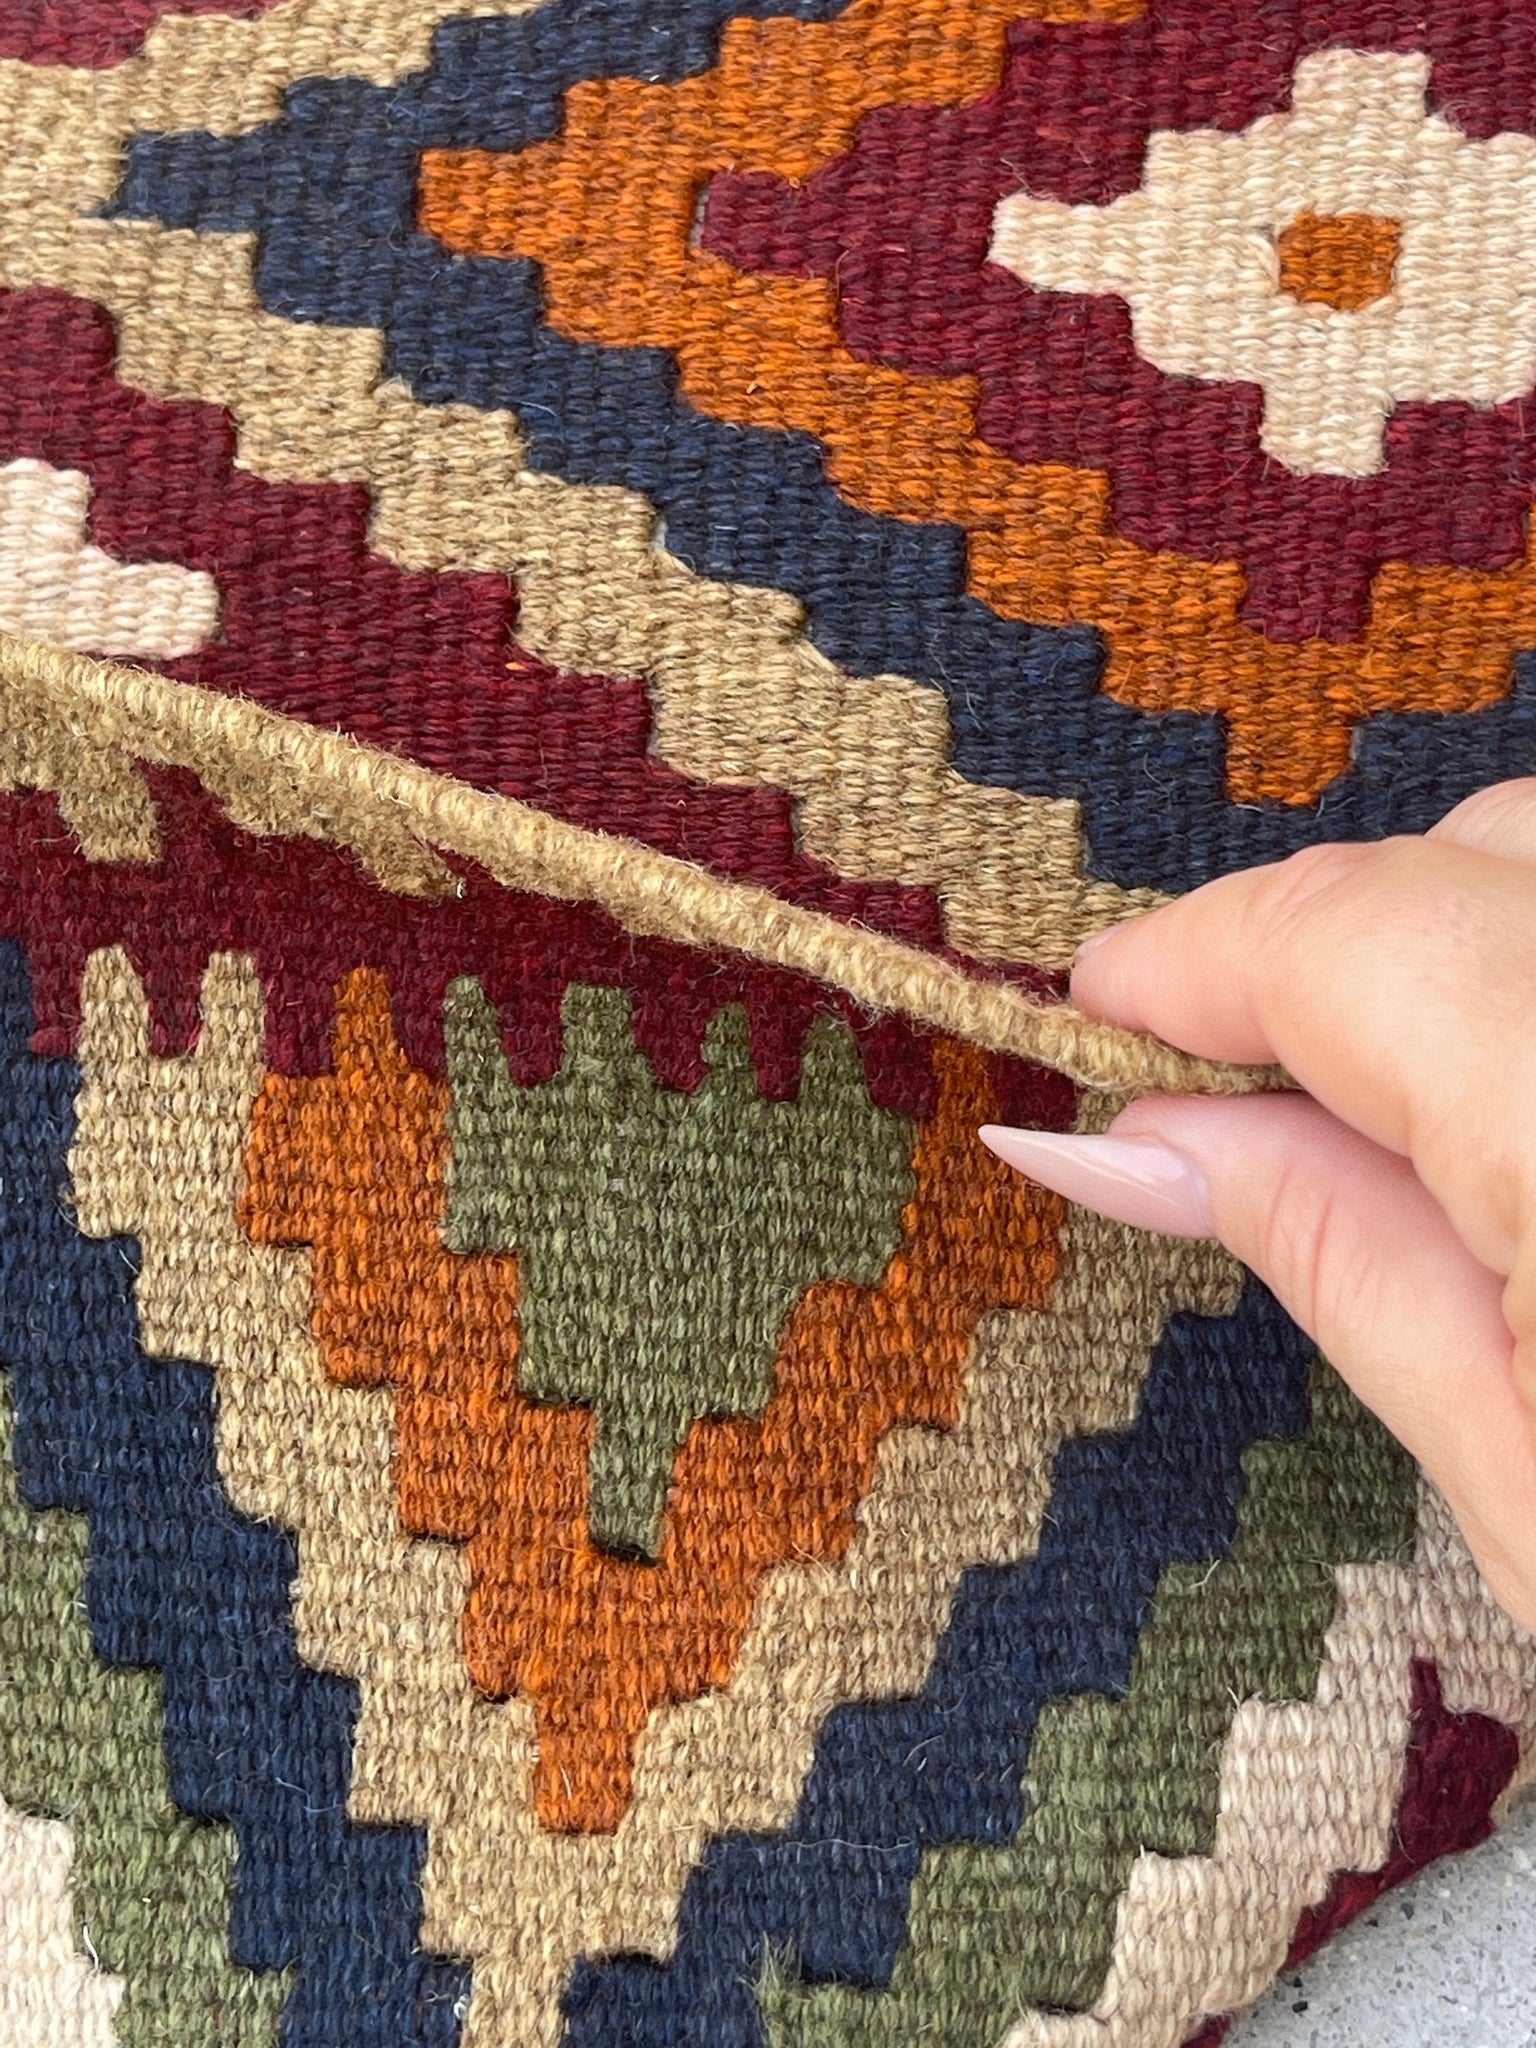 2x8 (60x245) Handmade Afghan Kilim Rug 